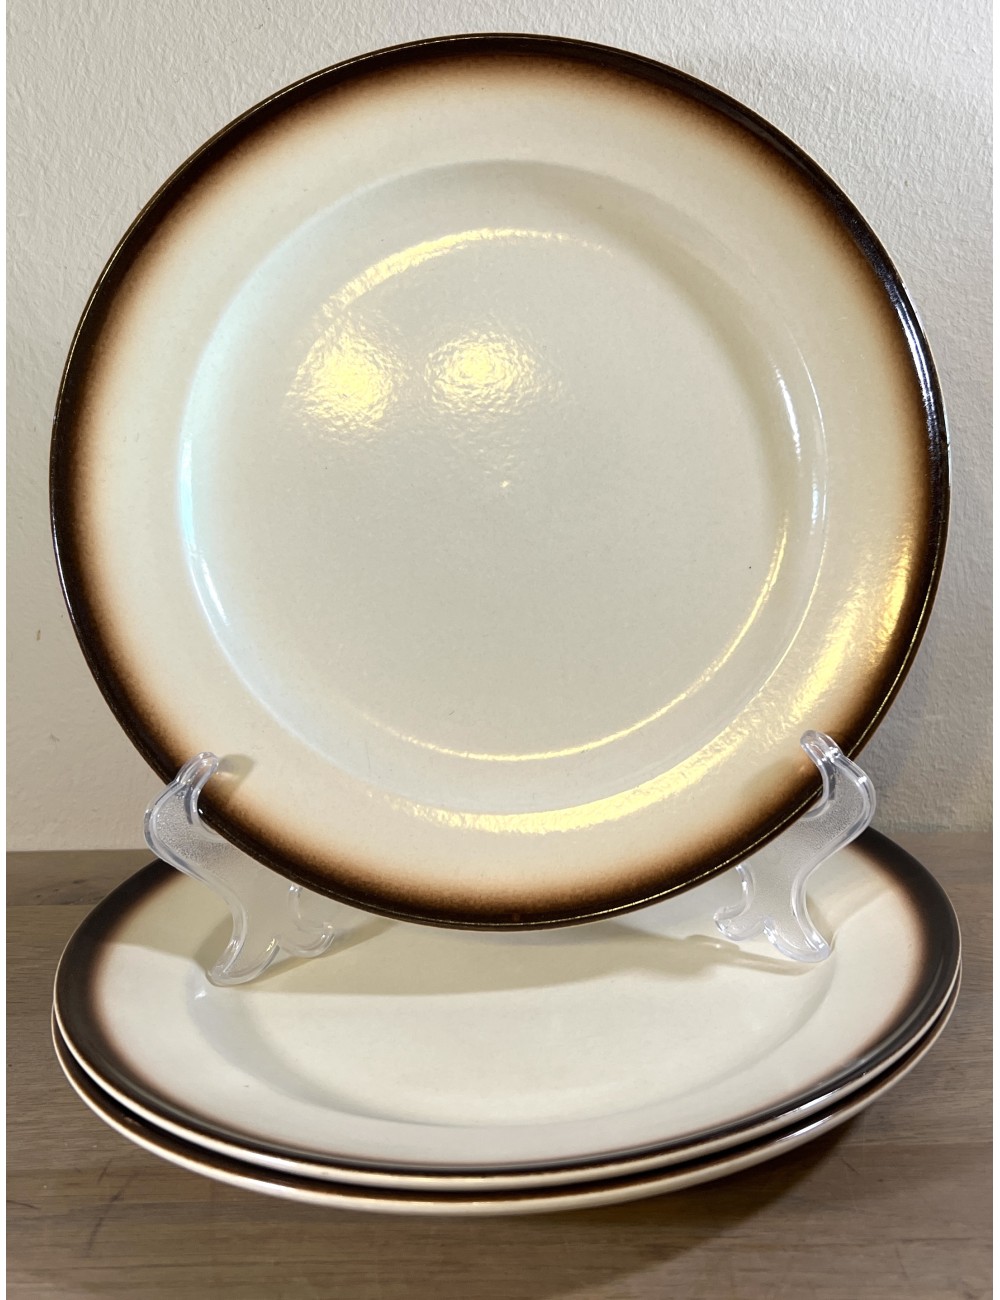 Dinerbord / Eetbord - Boch - décor SIERRA (stoneware?) uitgevoerd in crème met een bruine rand